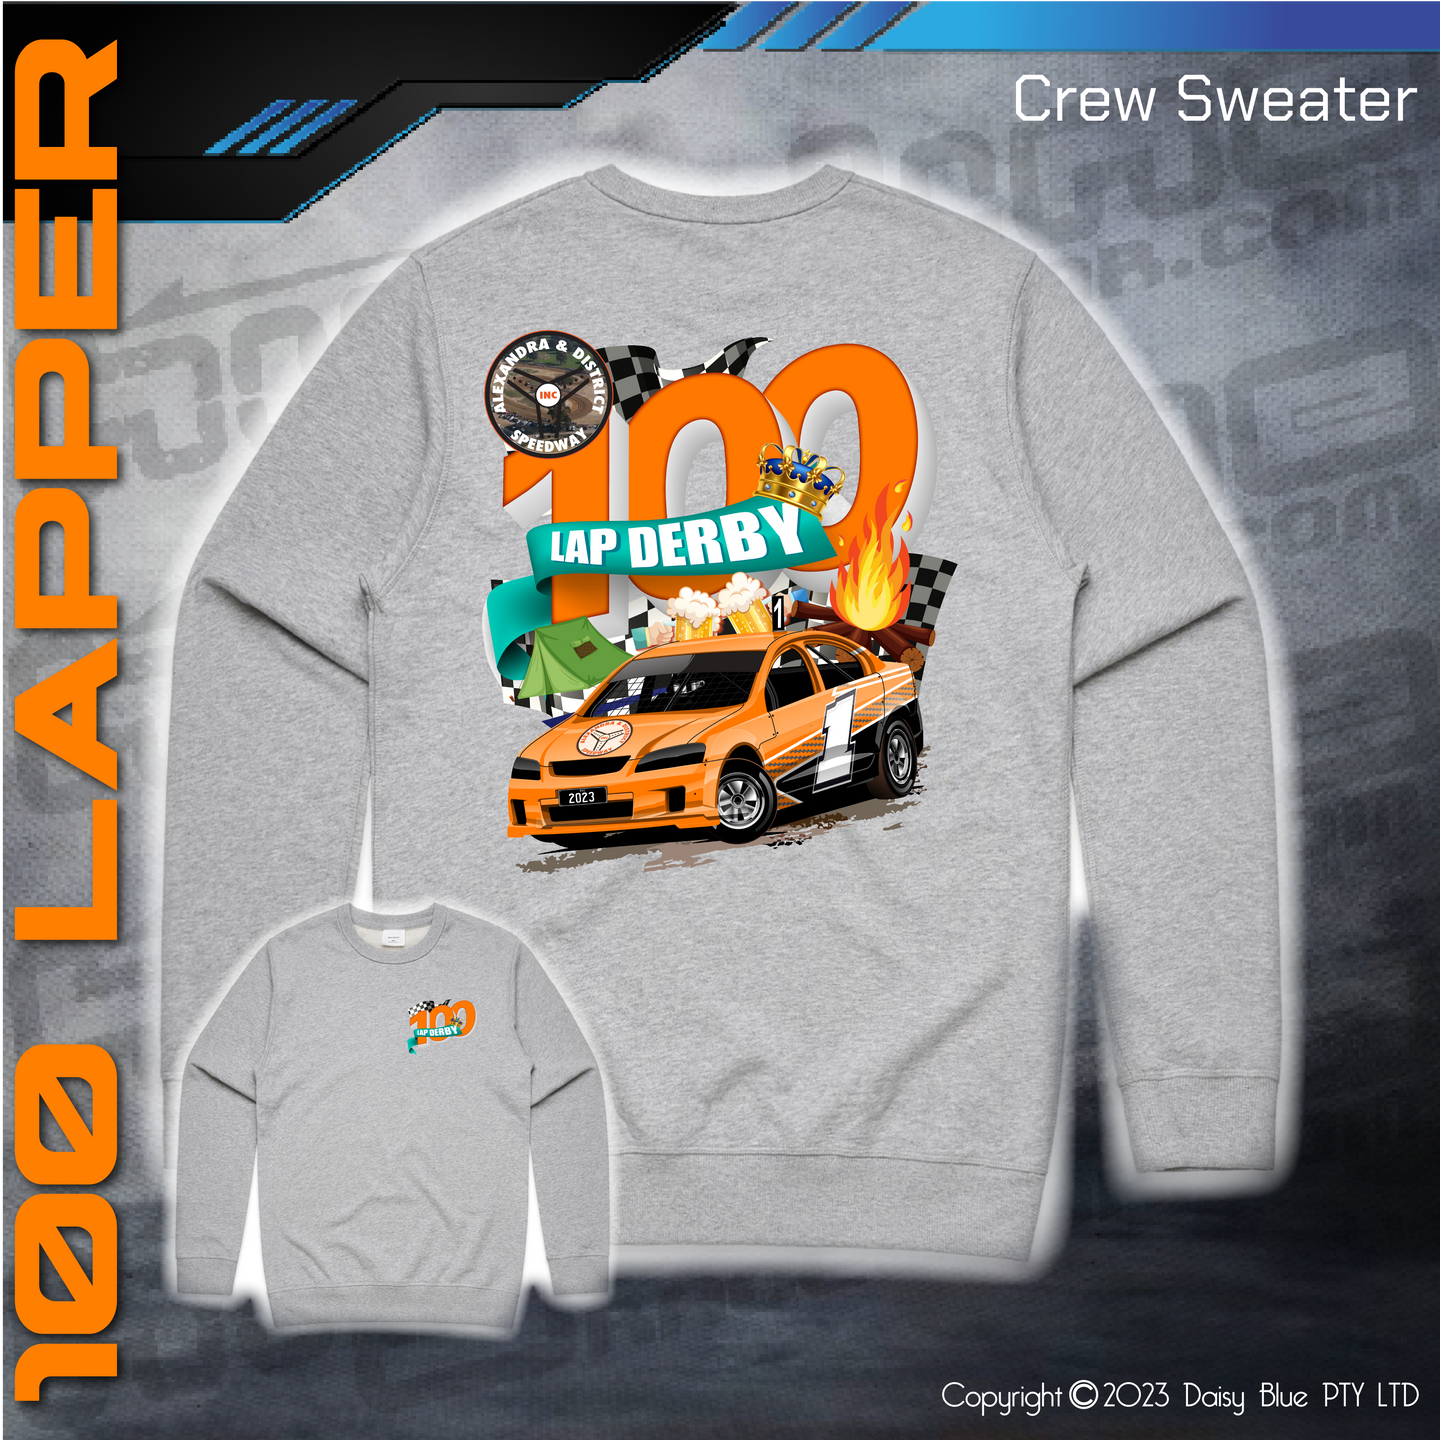 Crew Sweater - 100 Lapper 2023